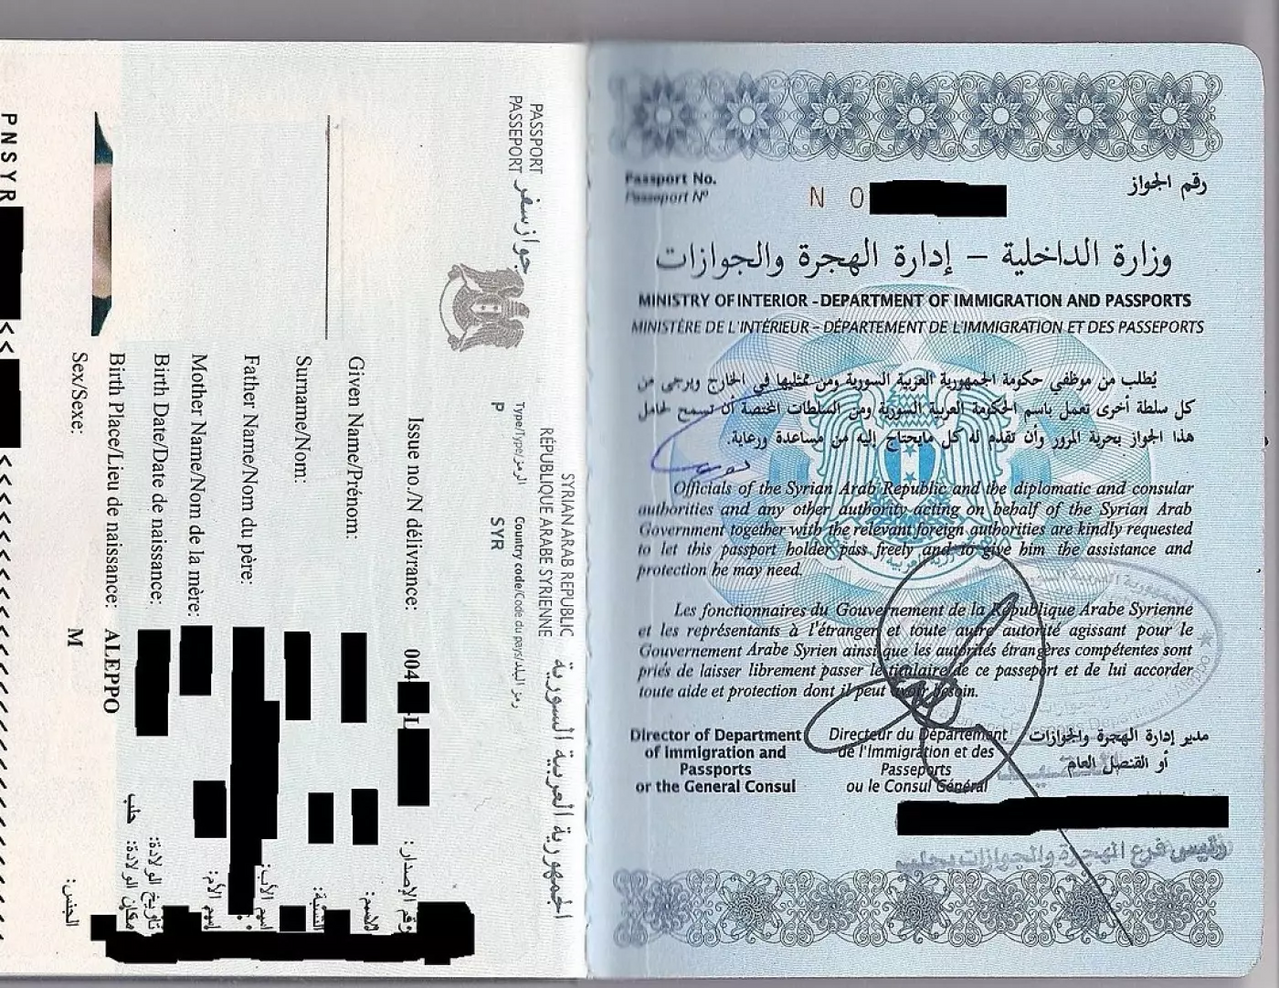 Massive leak: 3.3M Syrian refugee passports leaked in Türkiye, reports say